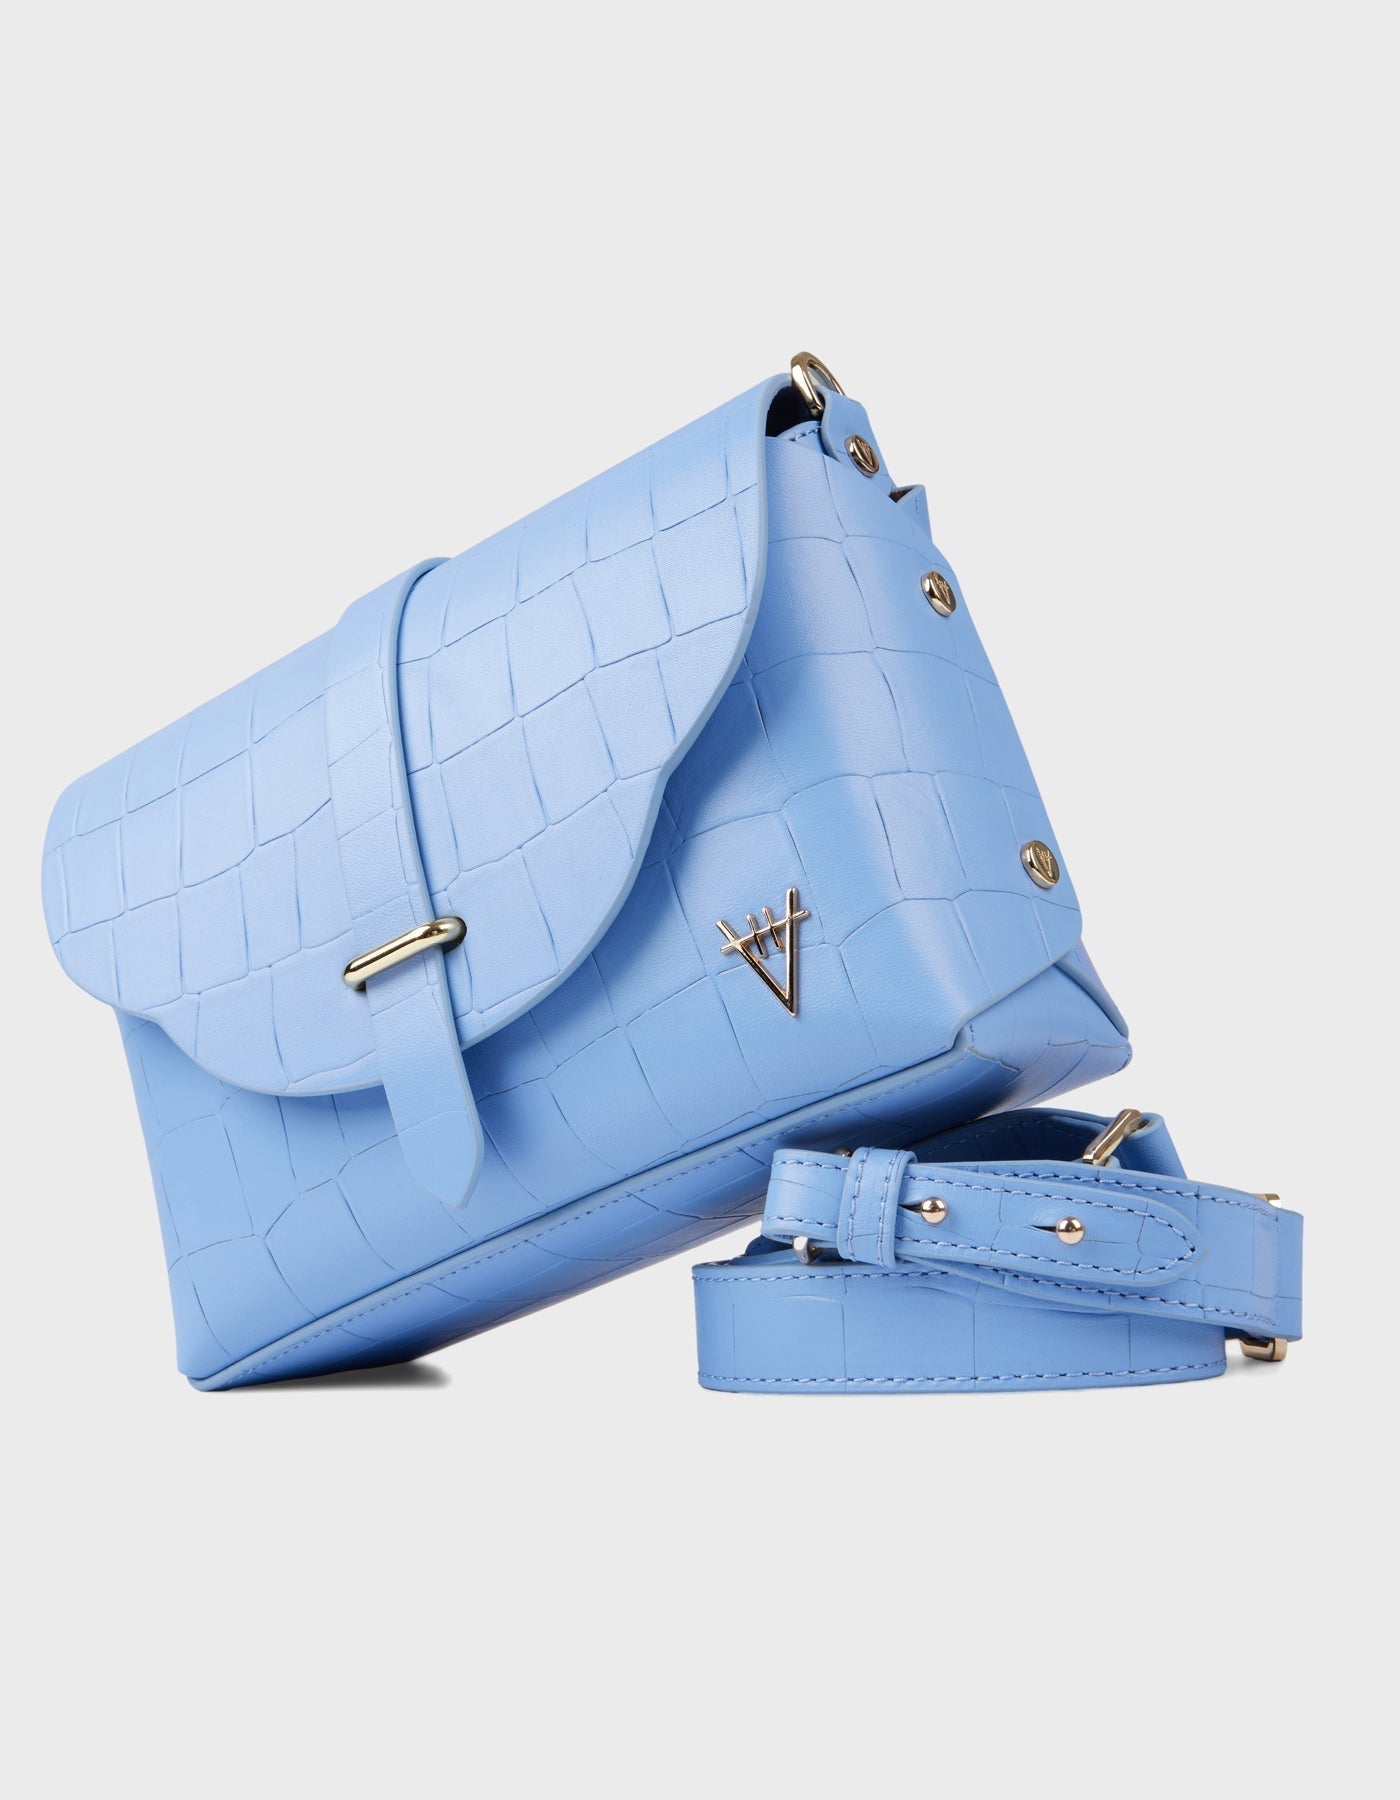 Hiva Atelier - Harmonia Shoulder Bag Croco Effect Tranquil Blue